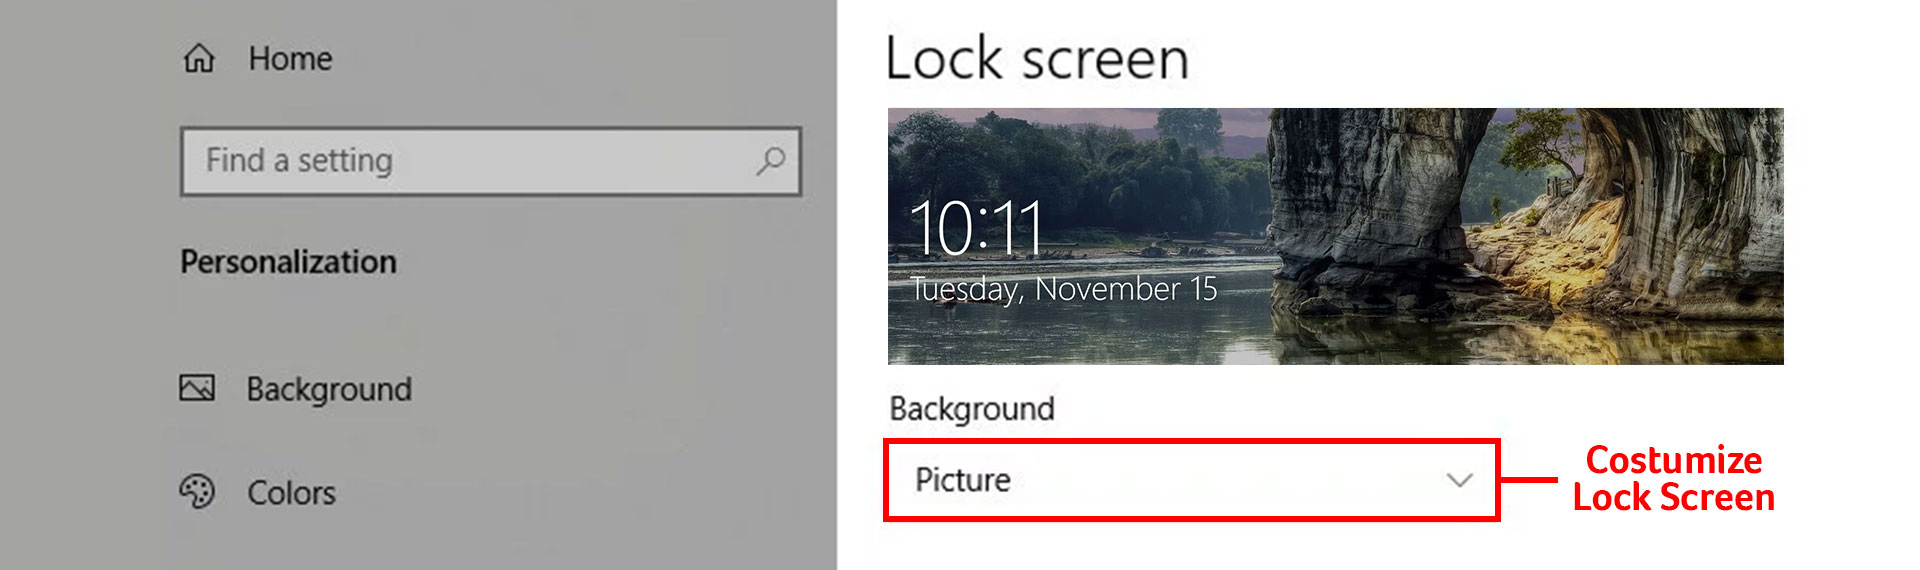 5 Cara Mengatur Windows 10 Lock Screen Di Laptop Kamu